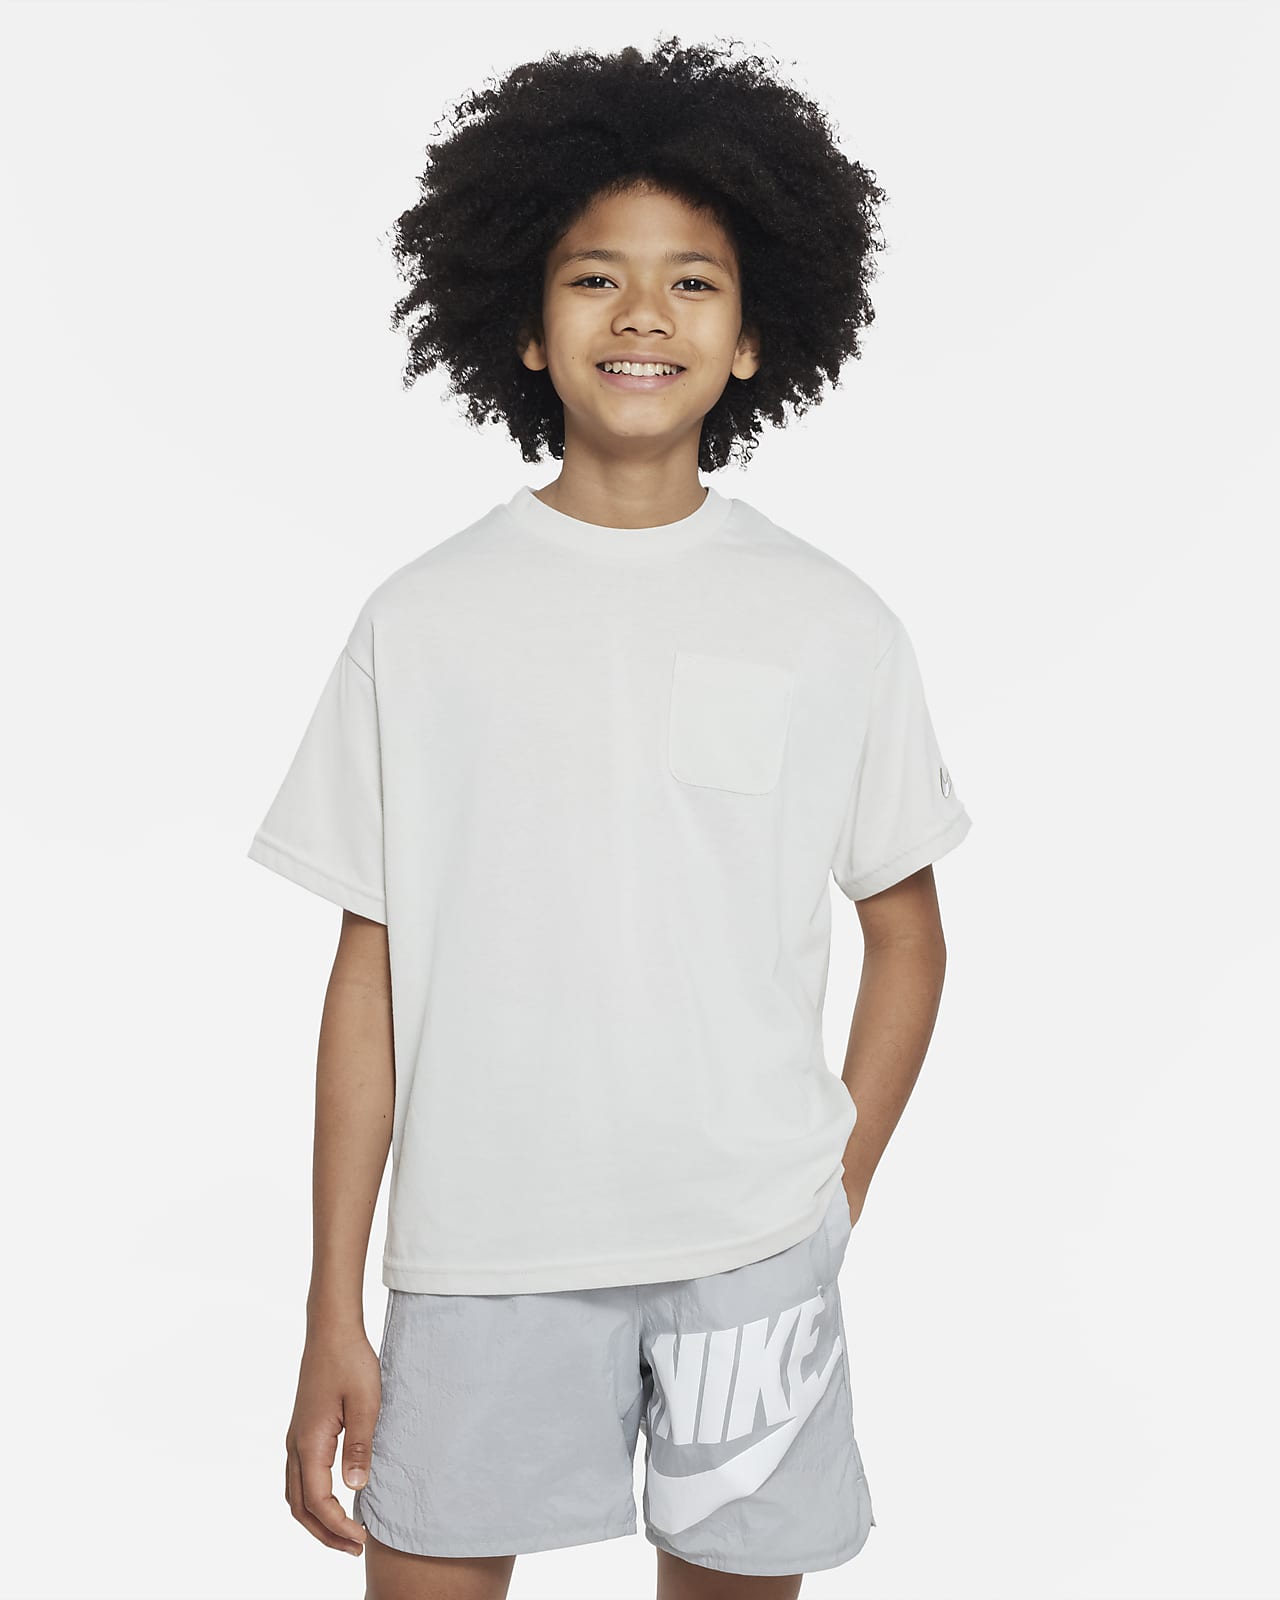 Nike Outdoor Play Big Kids' Short-Sleeve Top.